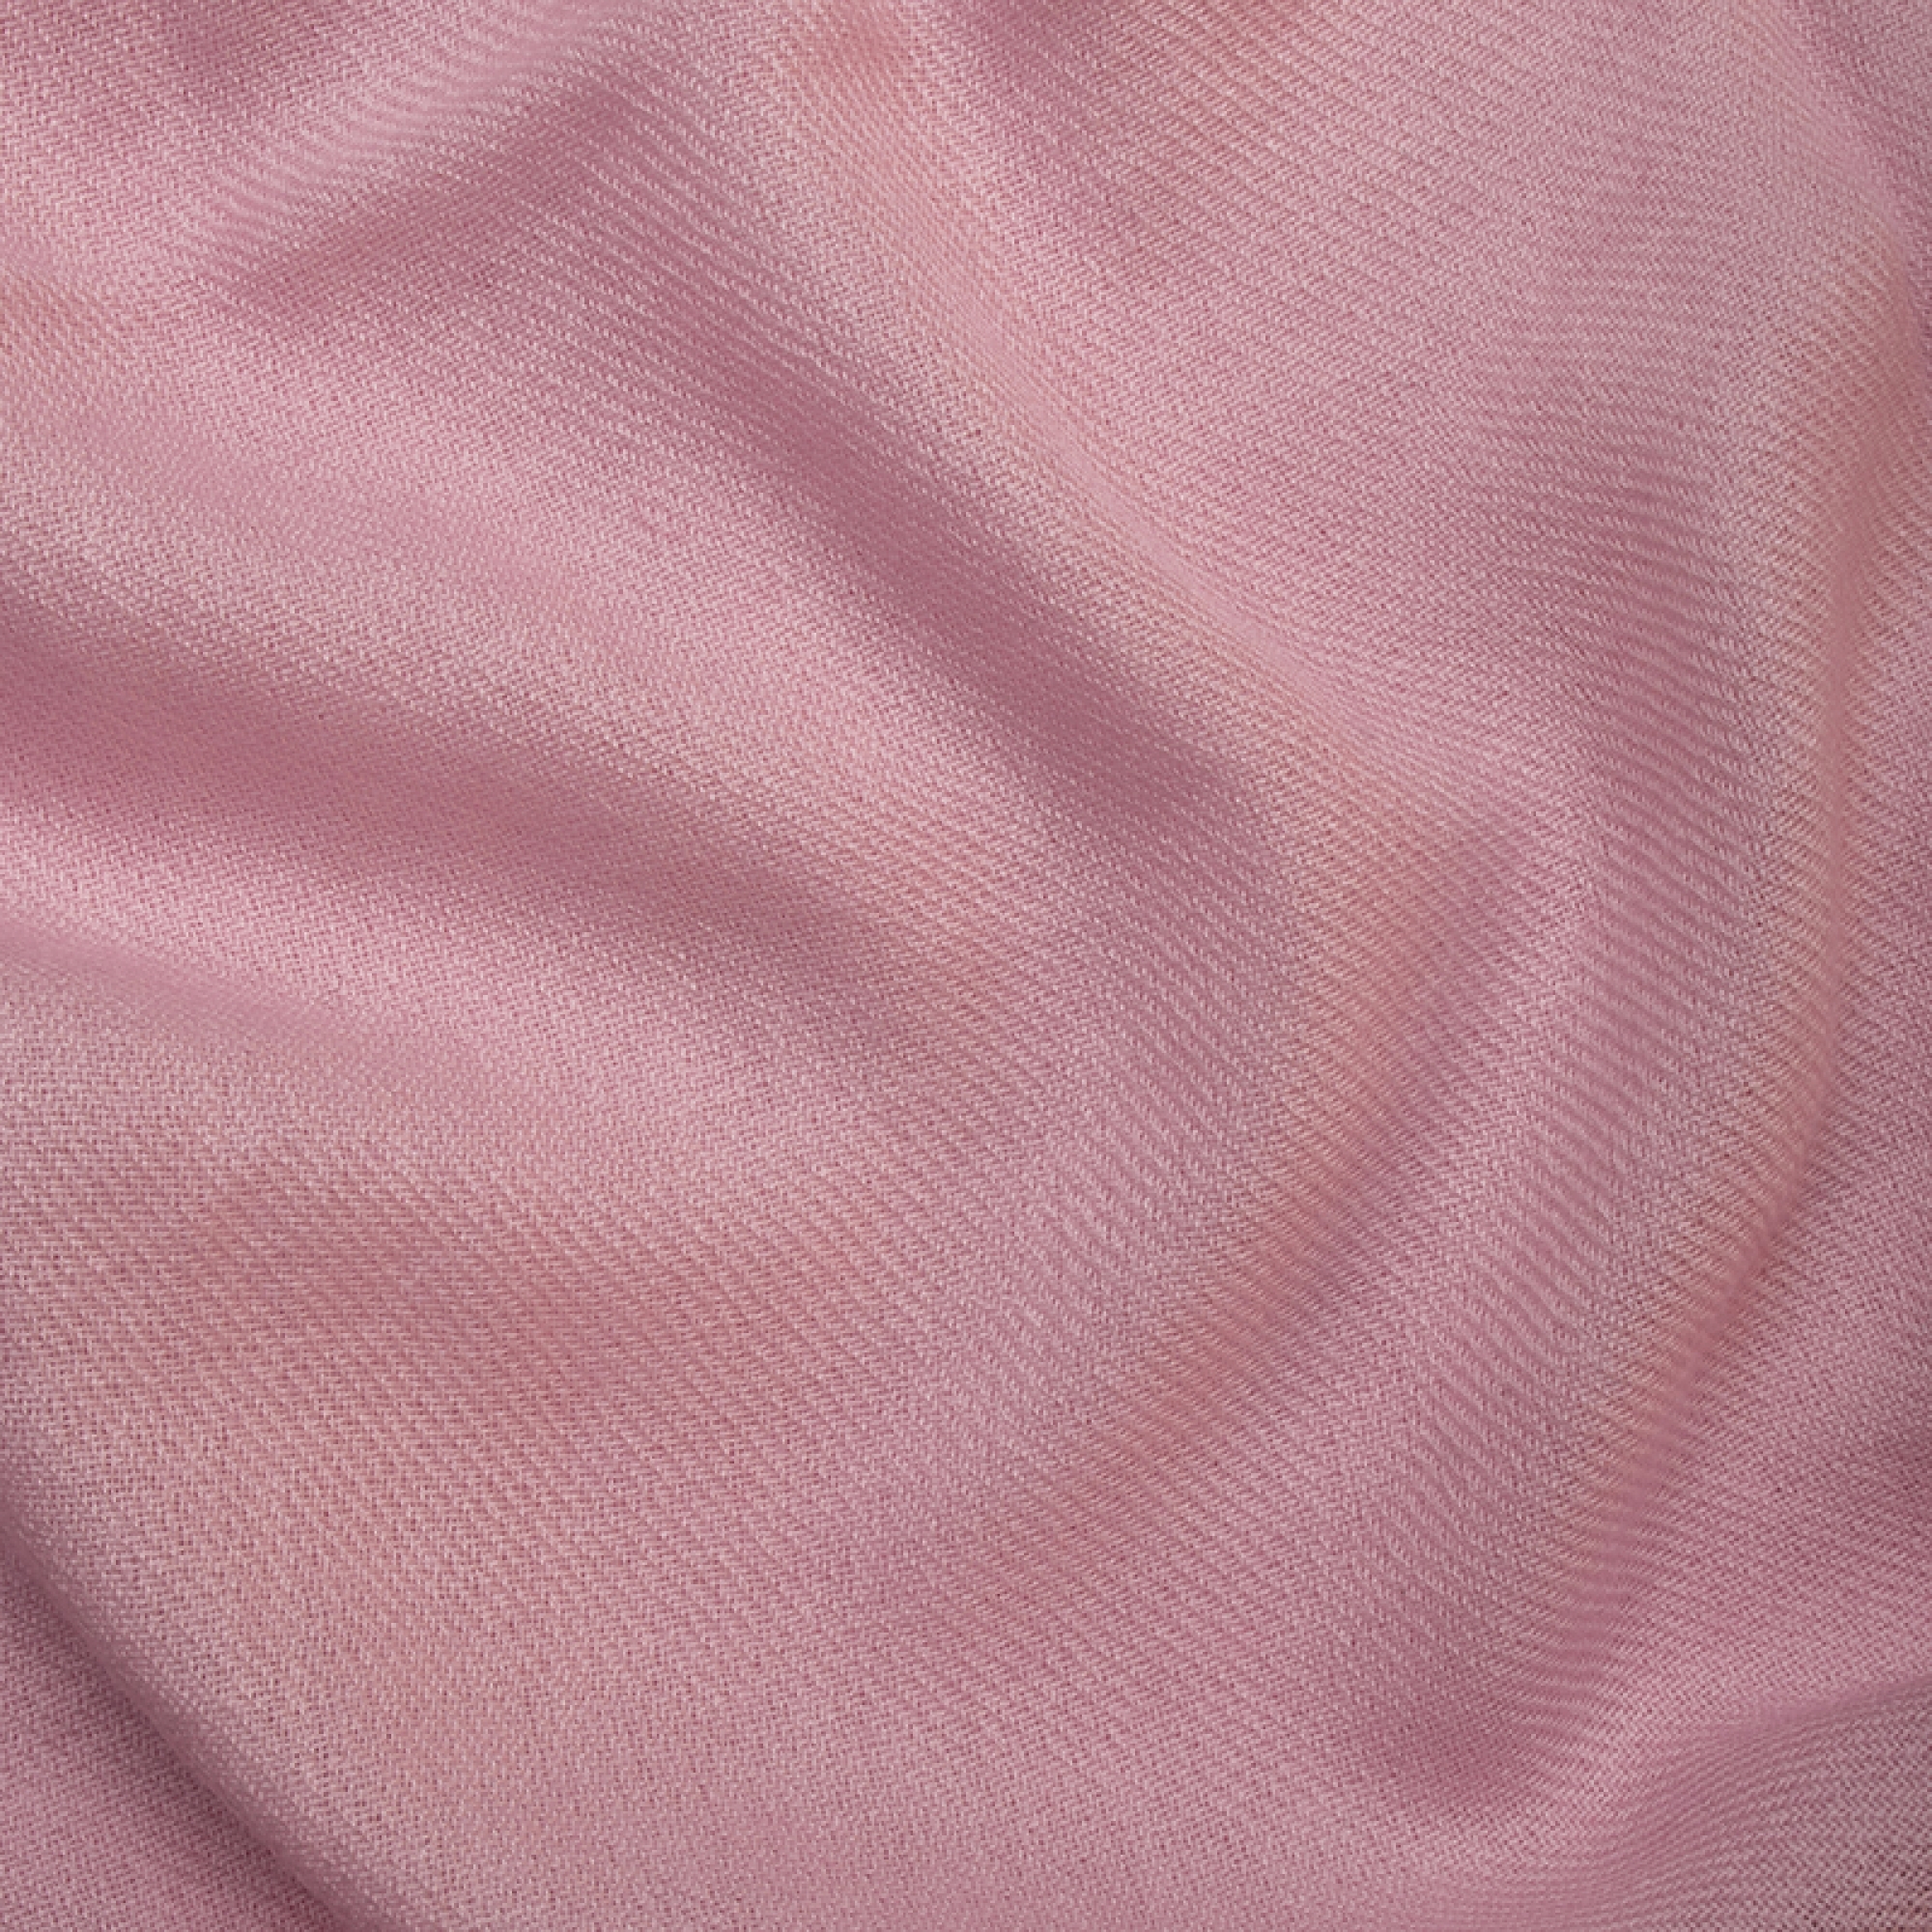 Cashmere accessories blanket toodoo plain l 220 x 220 shinking violet 220x220cm